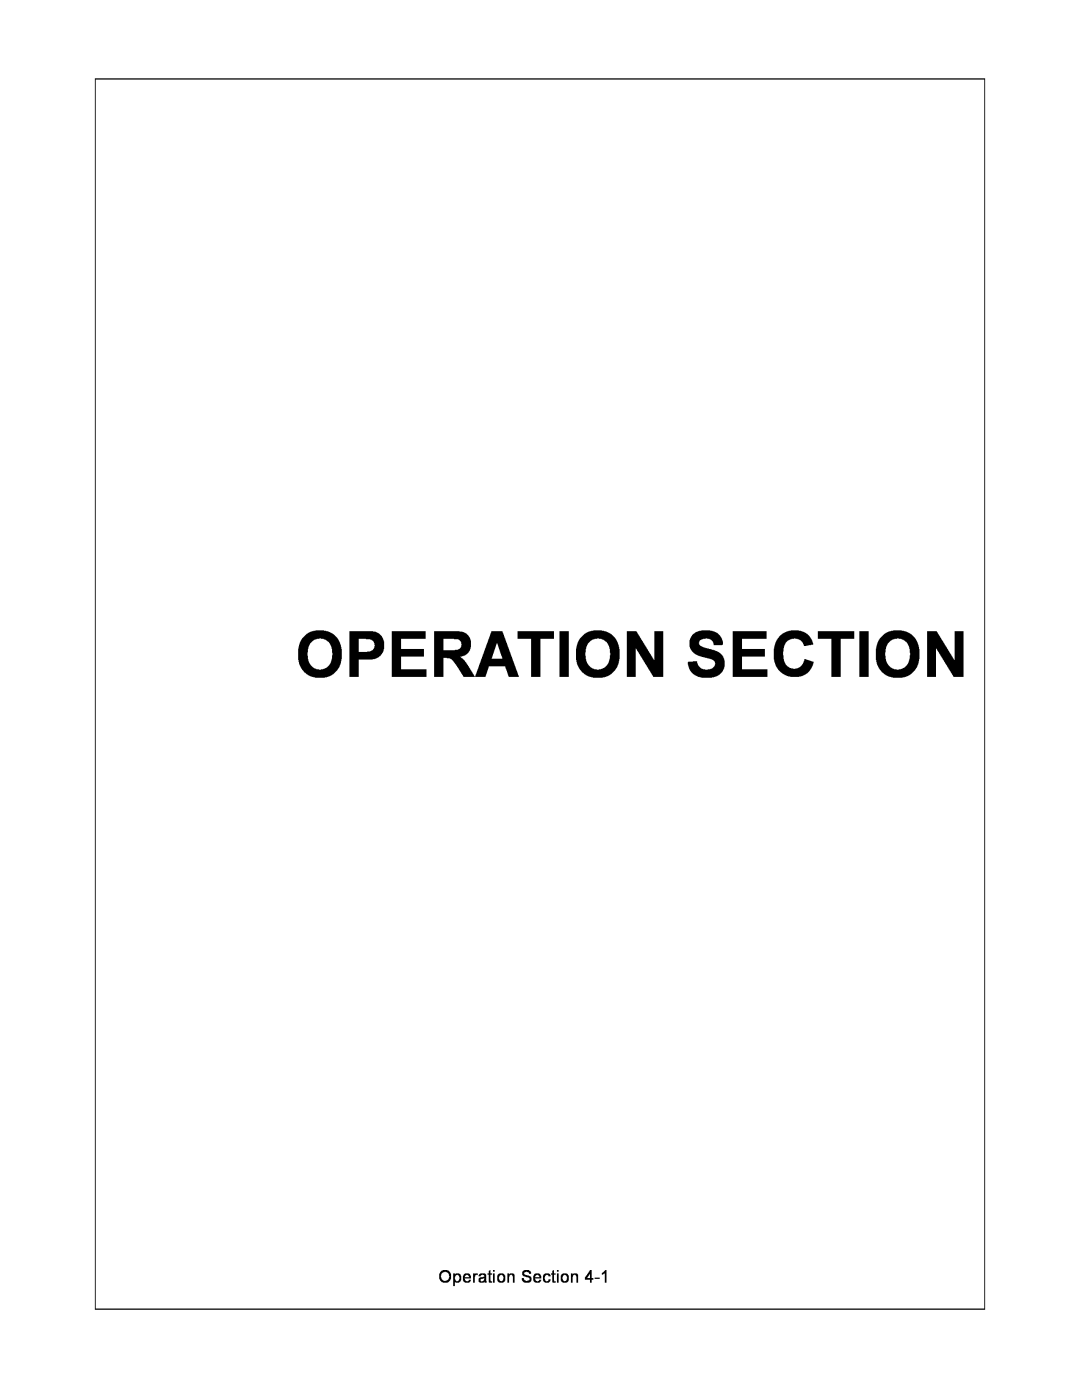 Alamo 6212 manual Operation Section 